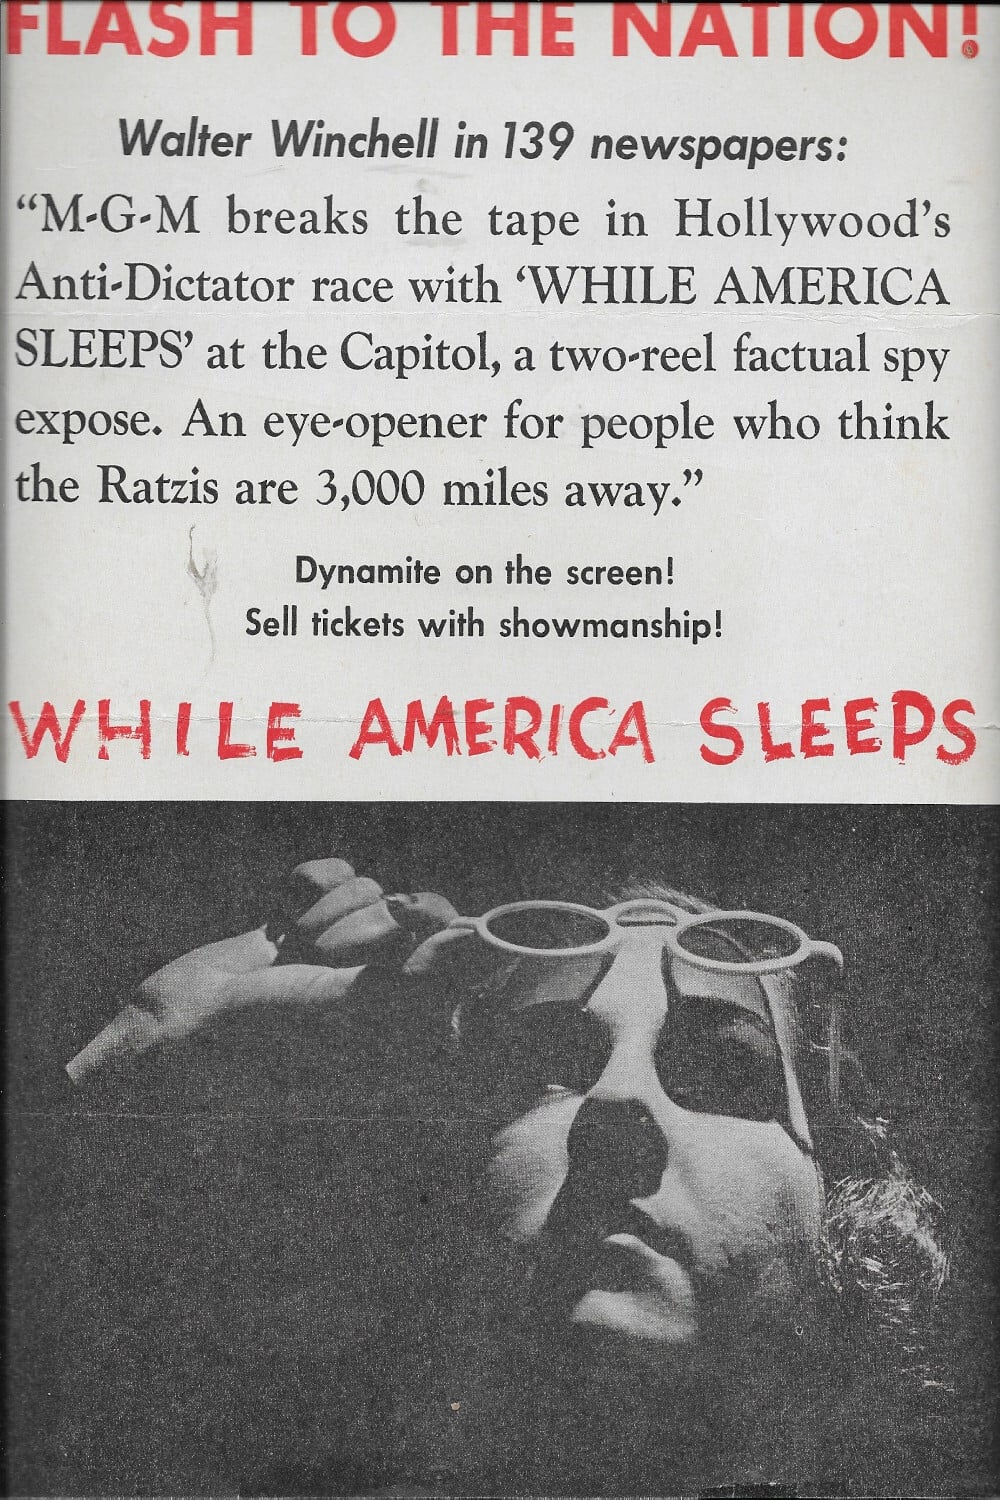 While America Sleeps (1939)